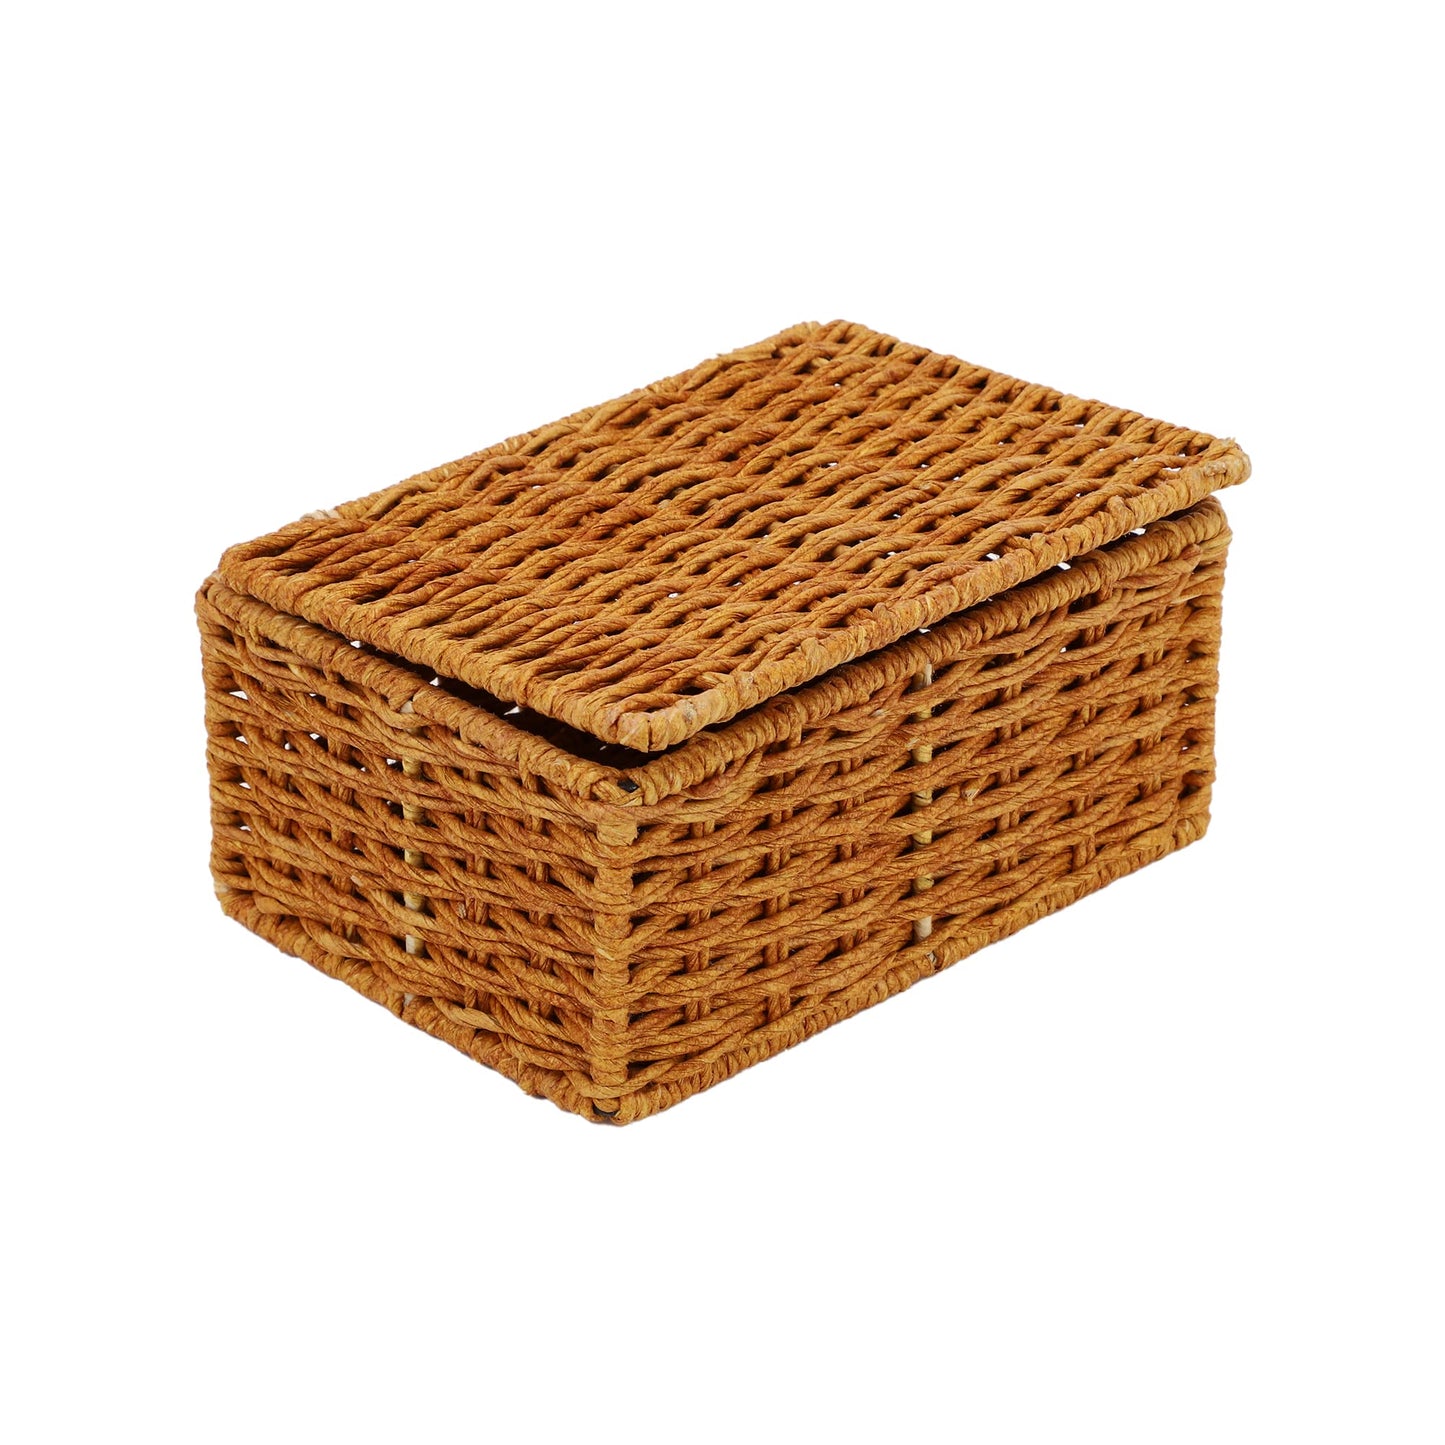 AKWAY wicker water hyacinth kauna grass bamboo cane Storage Basket with Lids Rectangular Handwoven Wicker Organizer Baskets Desktop Storage Box Rattan Container Desk Basket(Brown)(8.5"L X 6"W X 3.5"H)- Akway